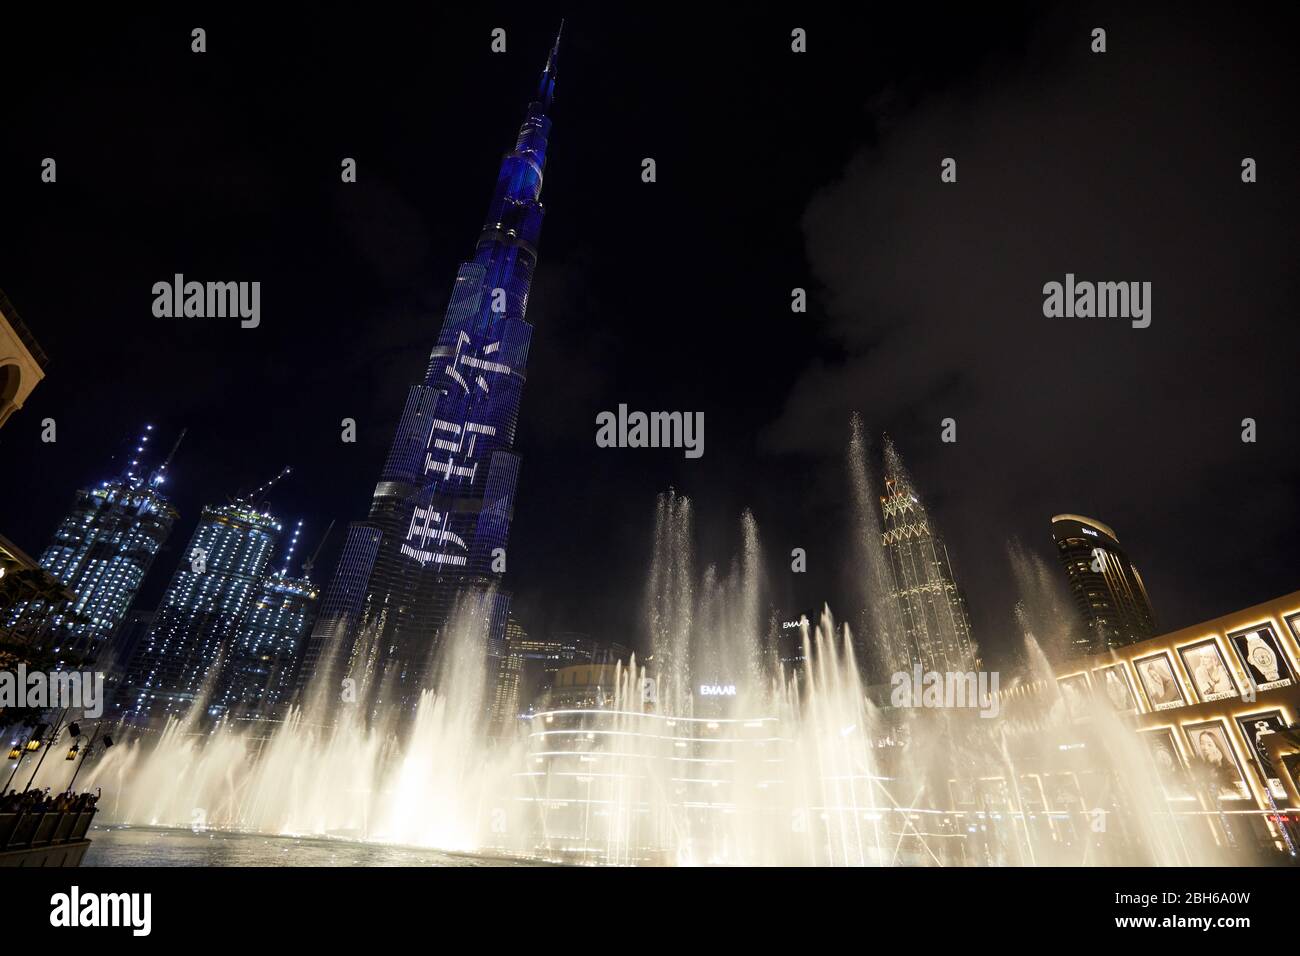 DUBAI, EMIRATOS ÁRABES UNIDOS - 21 DE NOVIEMBRE de 2019: Rascacielos Burj Khalifa iluminados por la noche y espectáculo de fuentes frente al centro comercial Dubai Mall Foto de stock